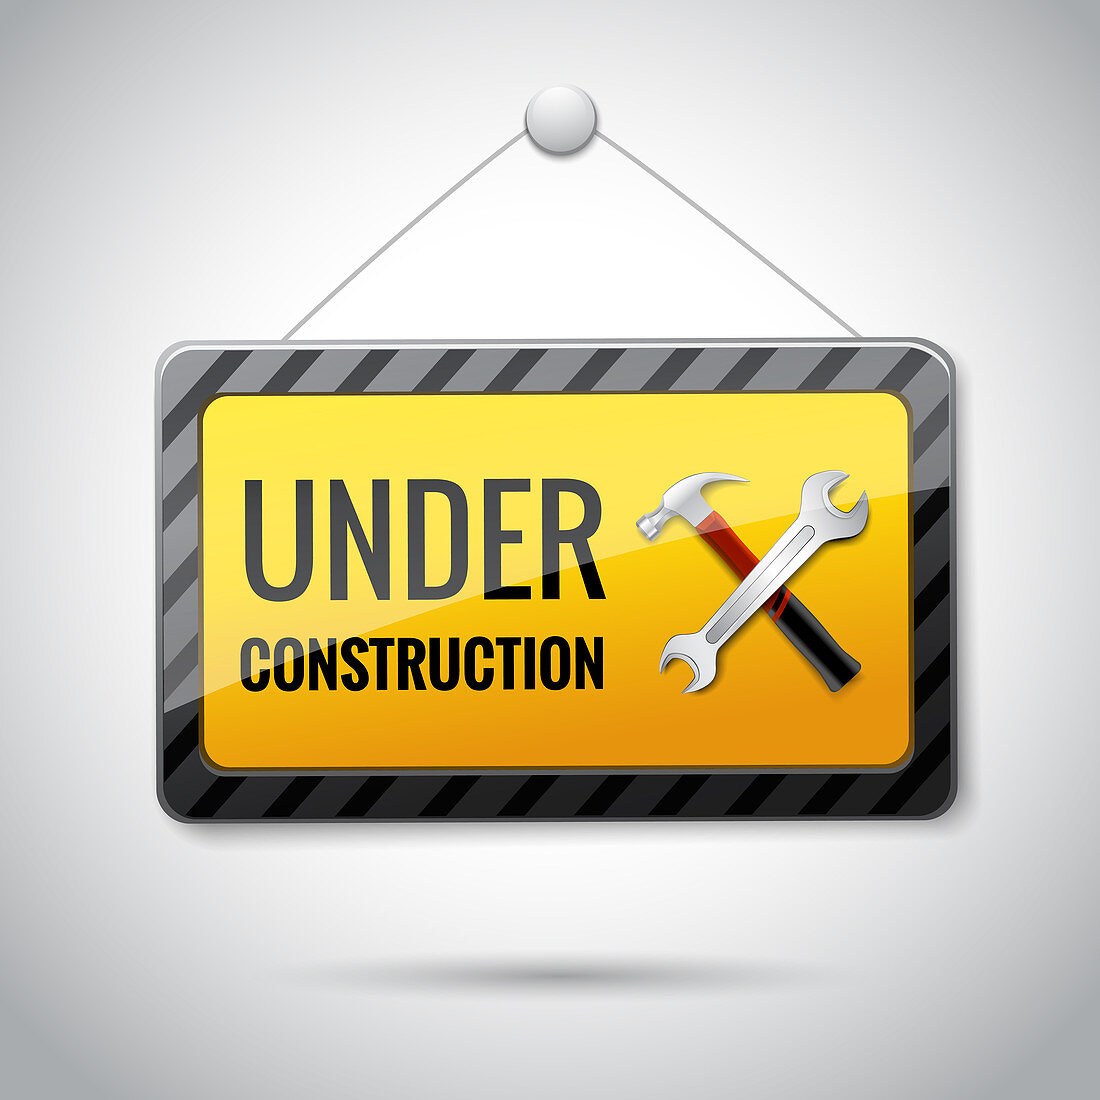 Under construction sign, illustration